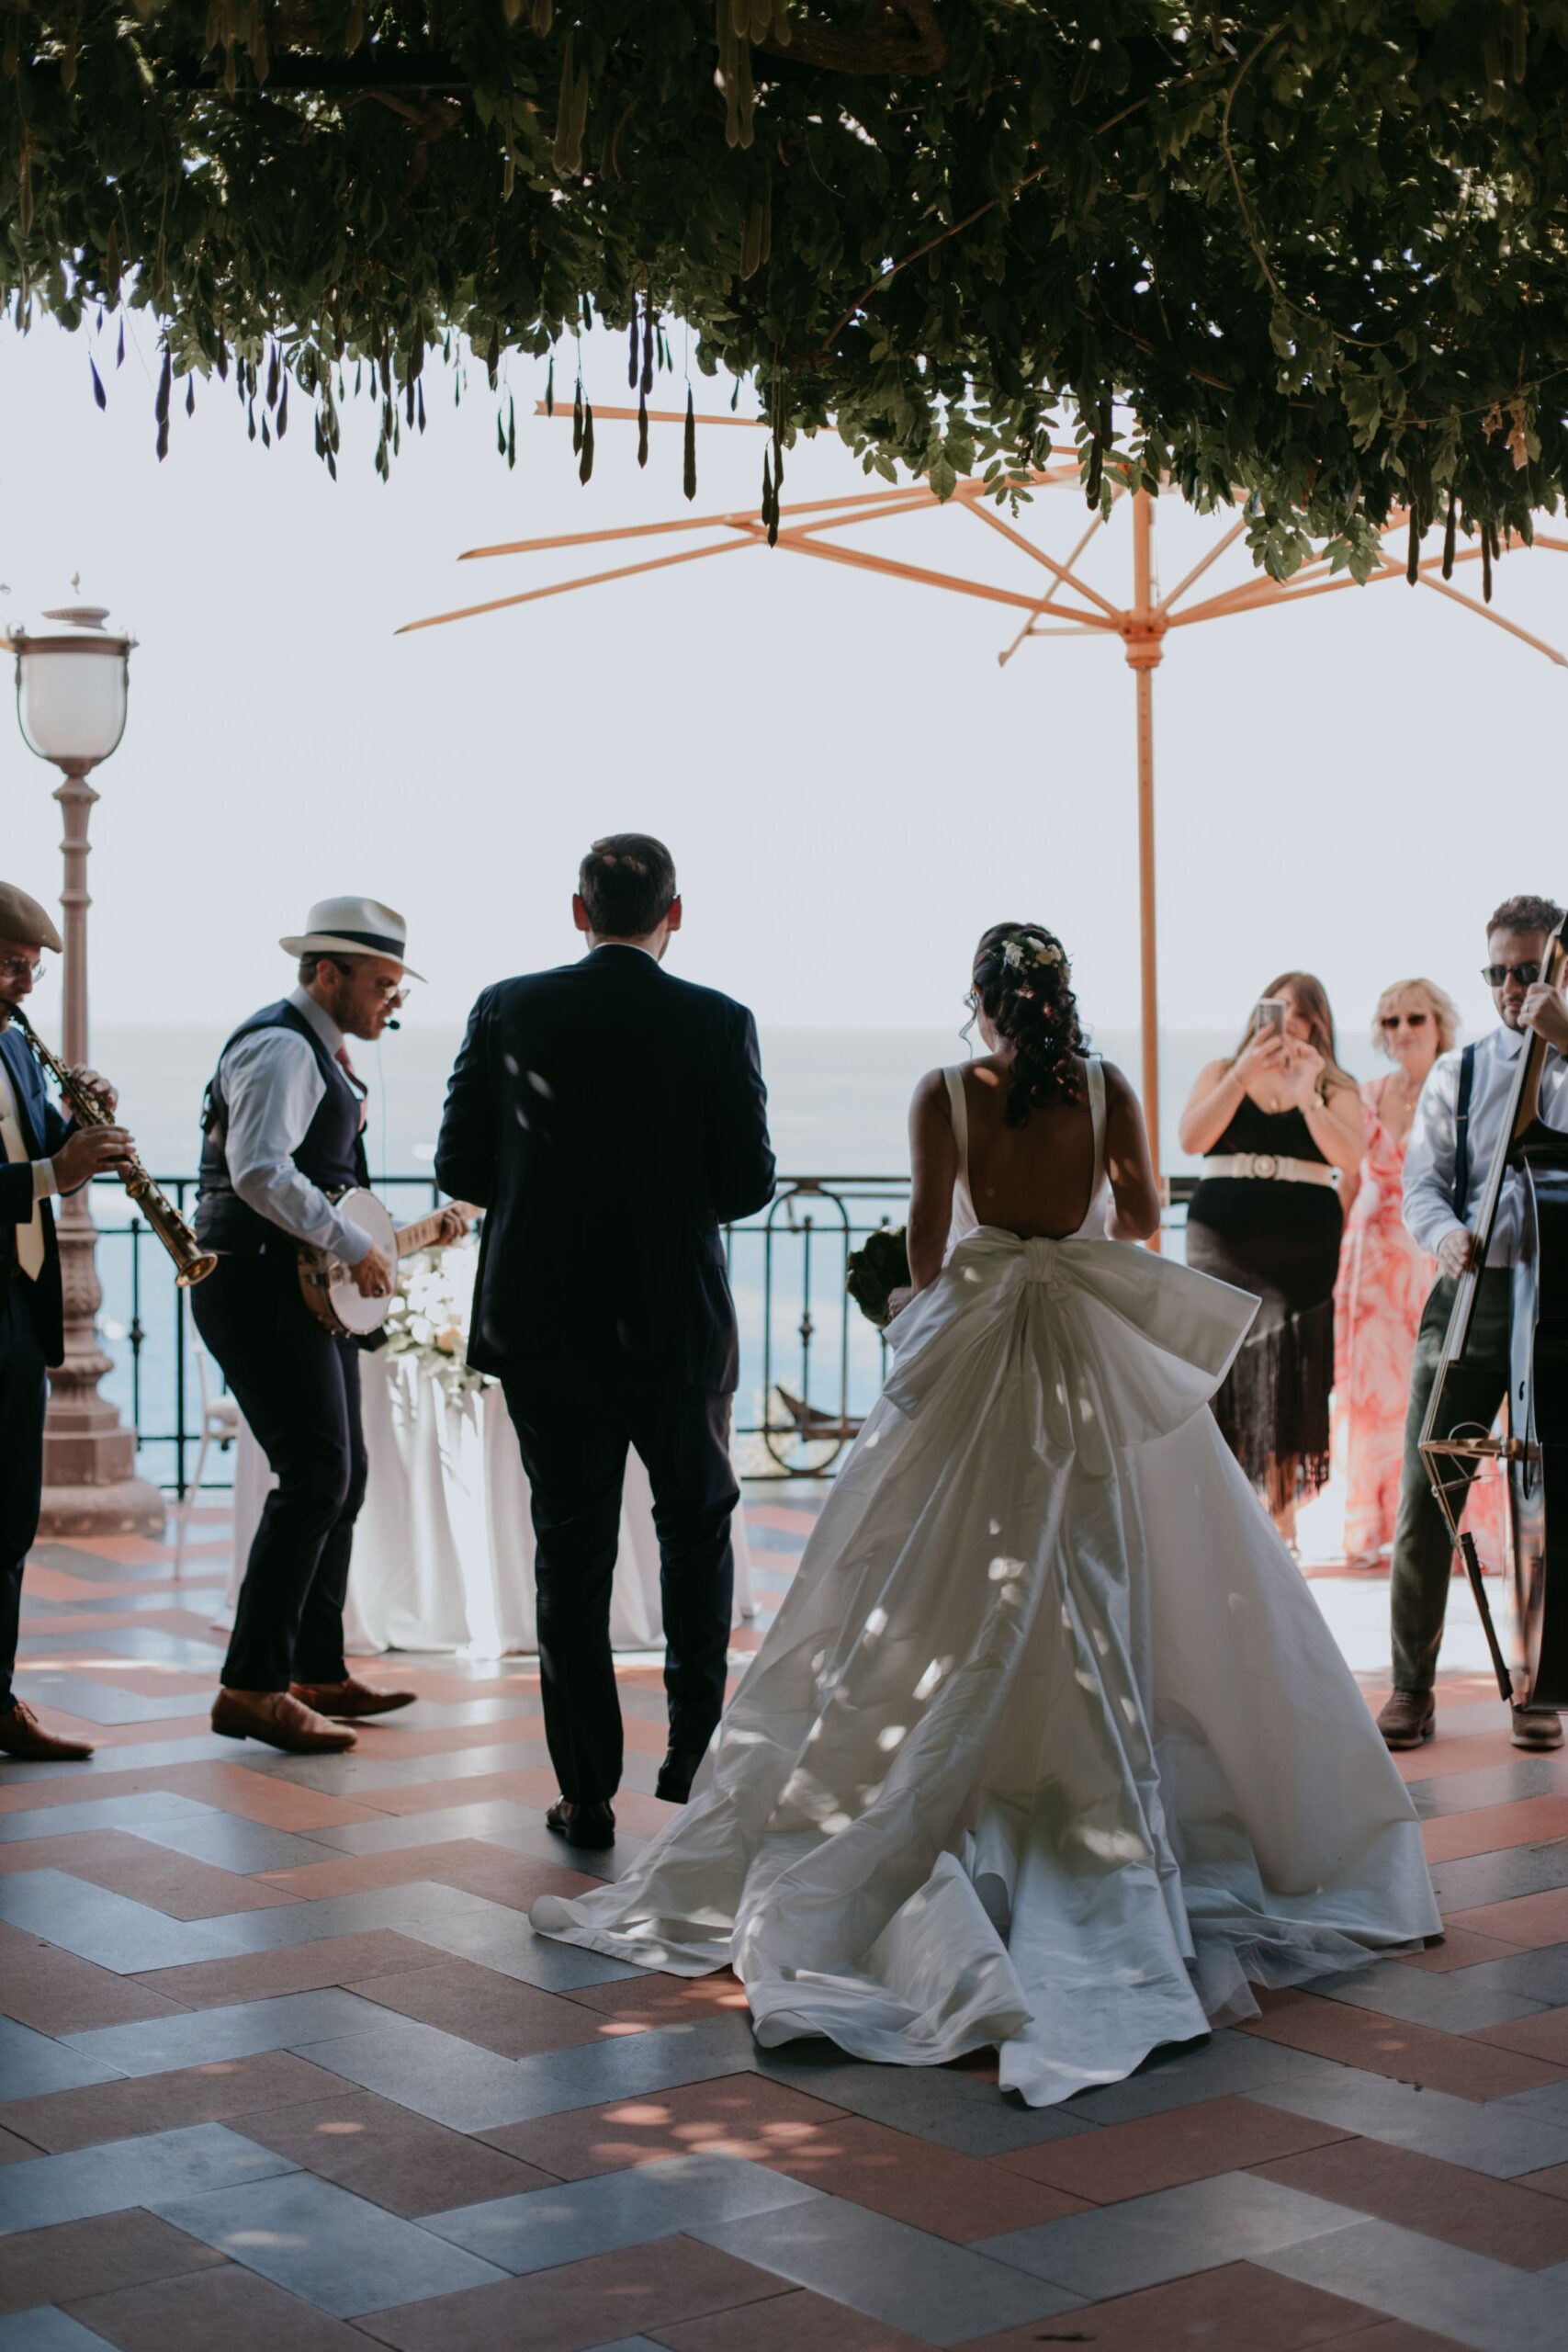 rhamely | fotografa | matrimonio | destination wedding | sorrento | wedding